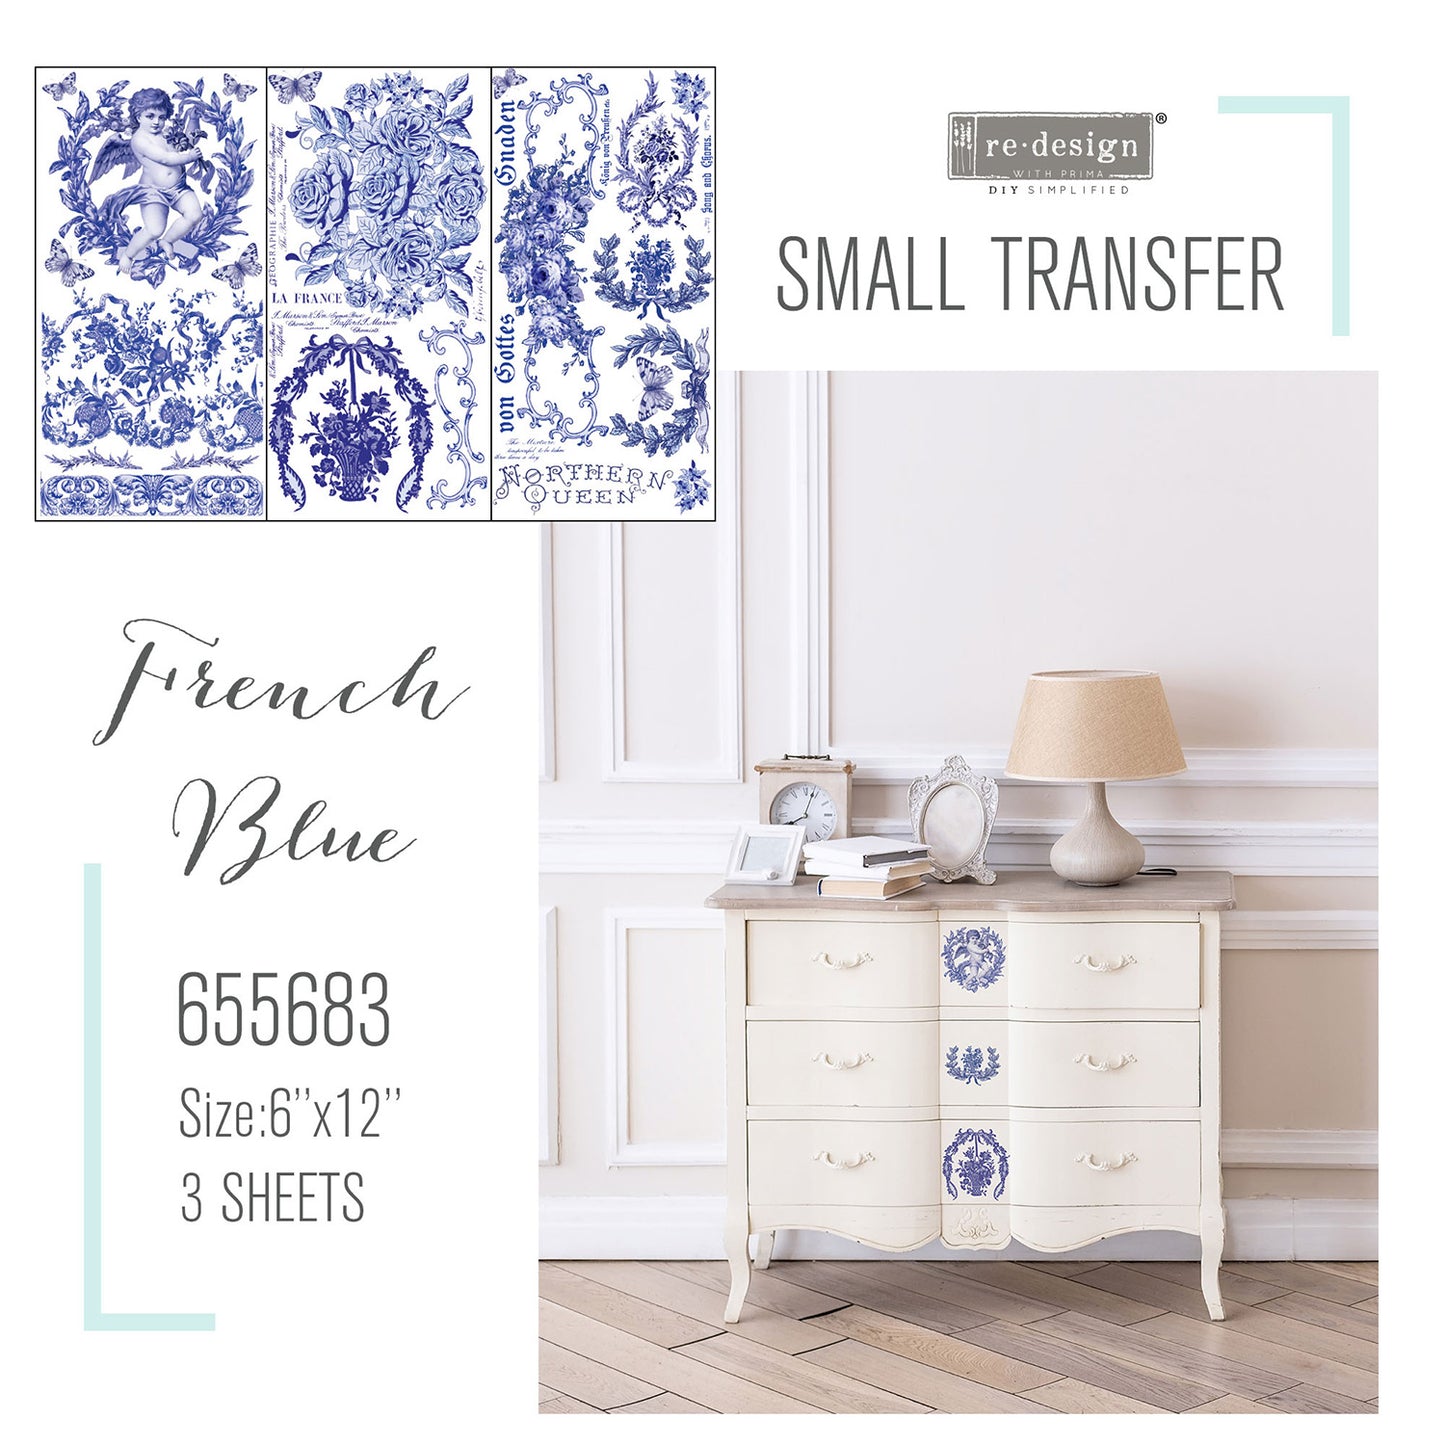 French Blue - Re-design Decor Transfer